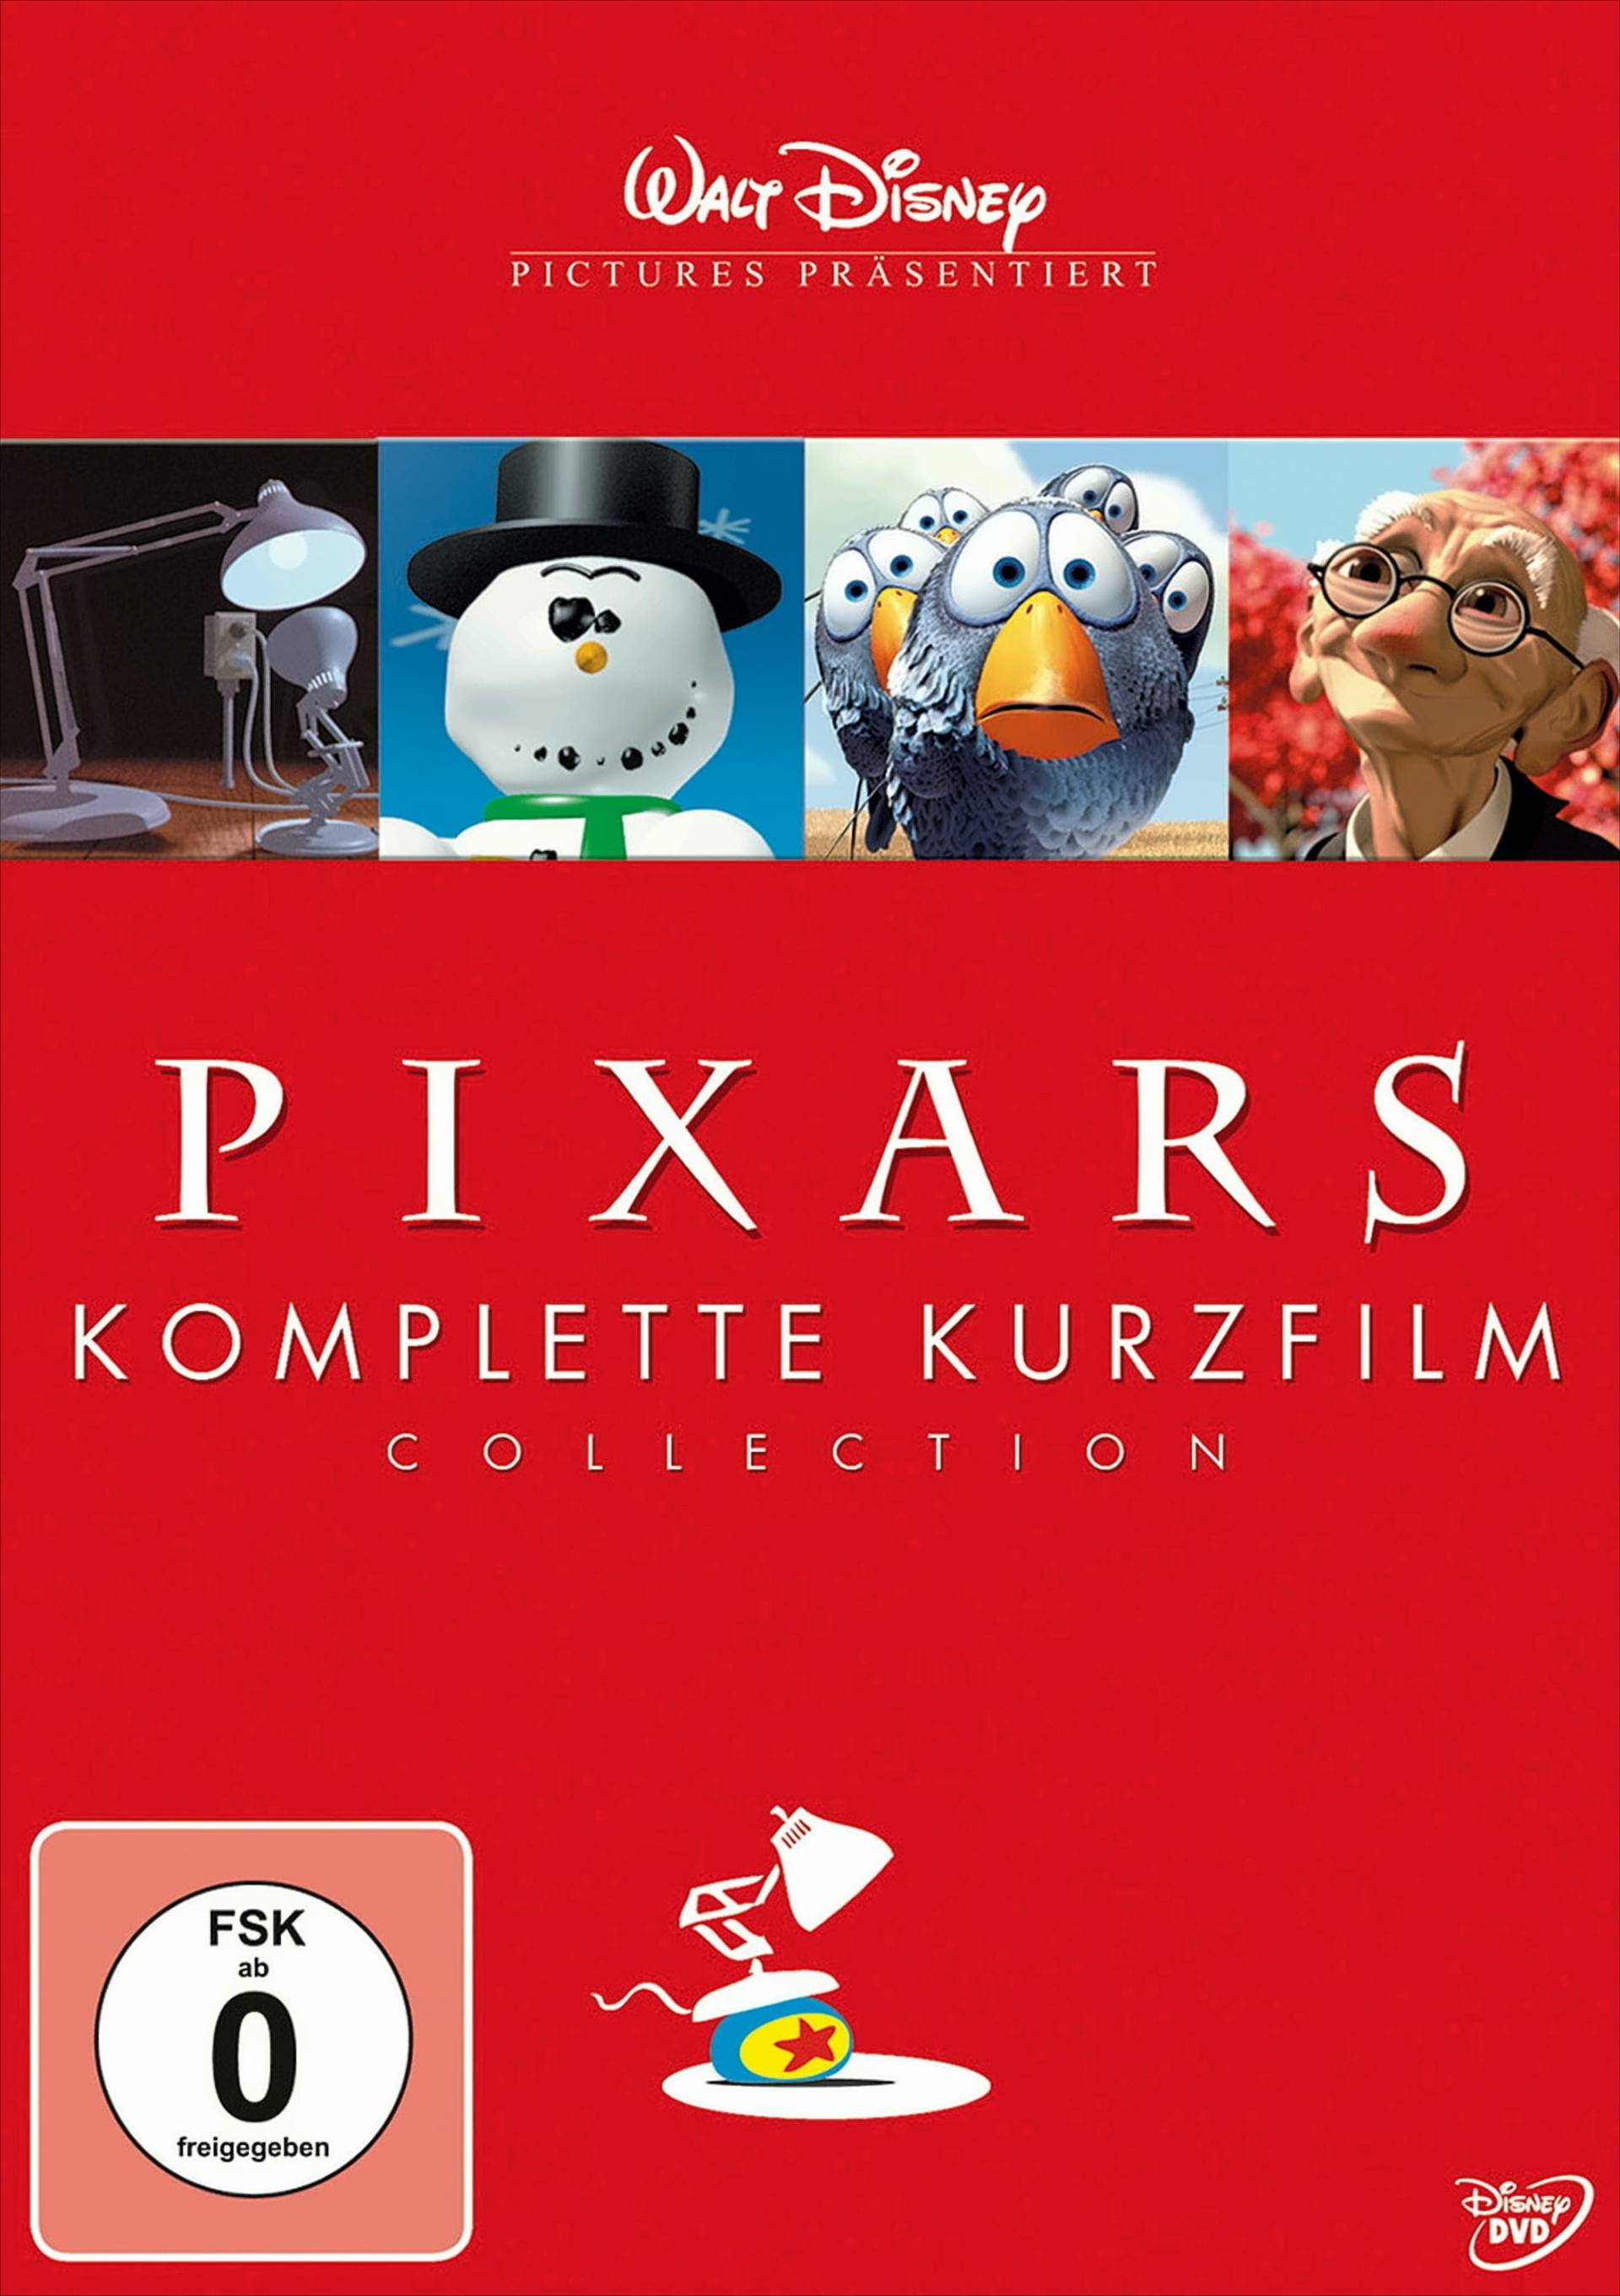 Pixars komplette Kurzfilm Collection von Walt Disney Studios